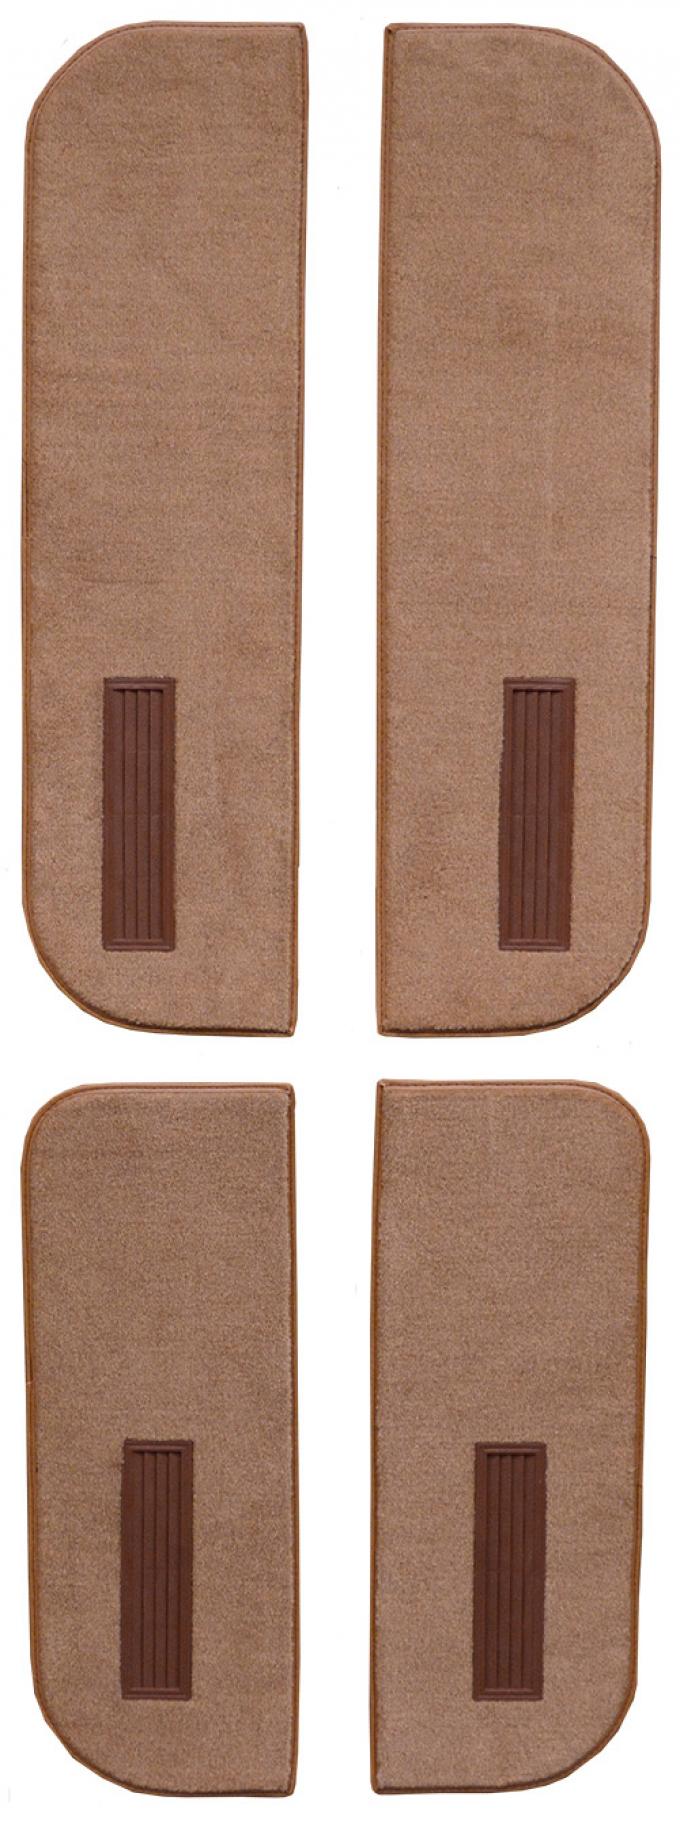 ACC 1987-1988 GMC V1500 Suburban Door Panel Inserts on Cardboard w/Vents 4pc Cutpile Carpet